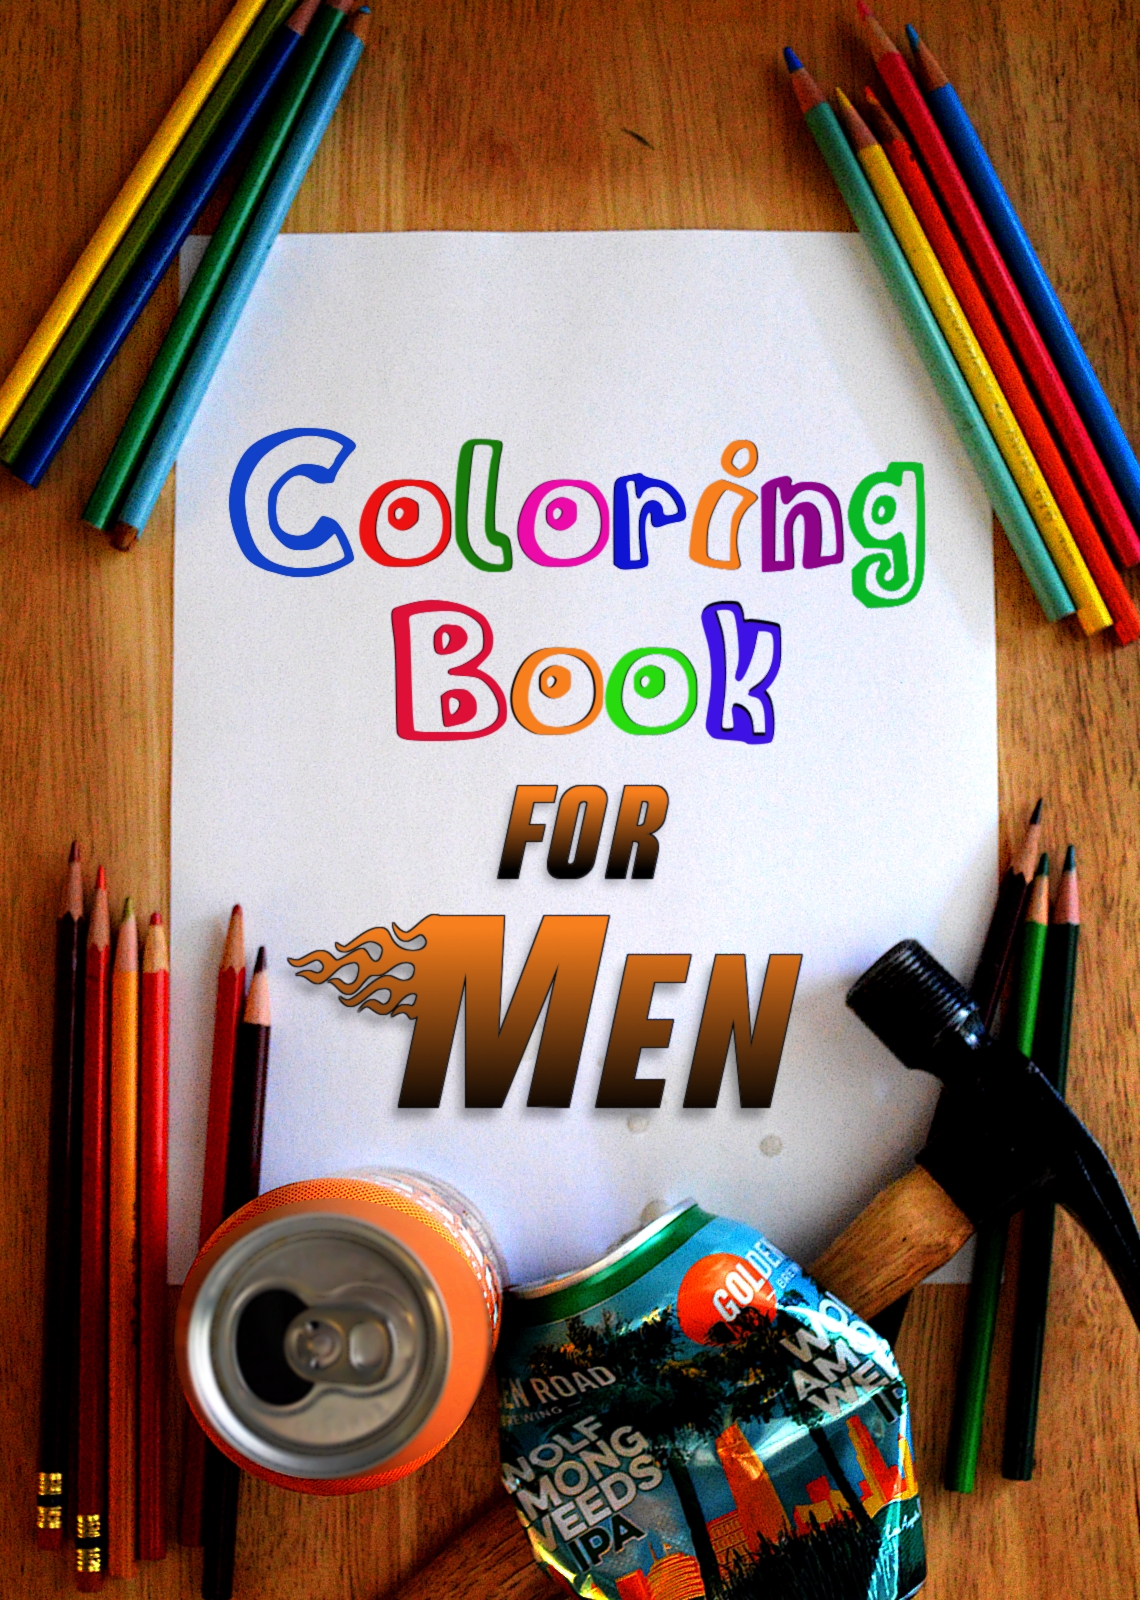 Coloring Book for Men